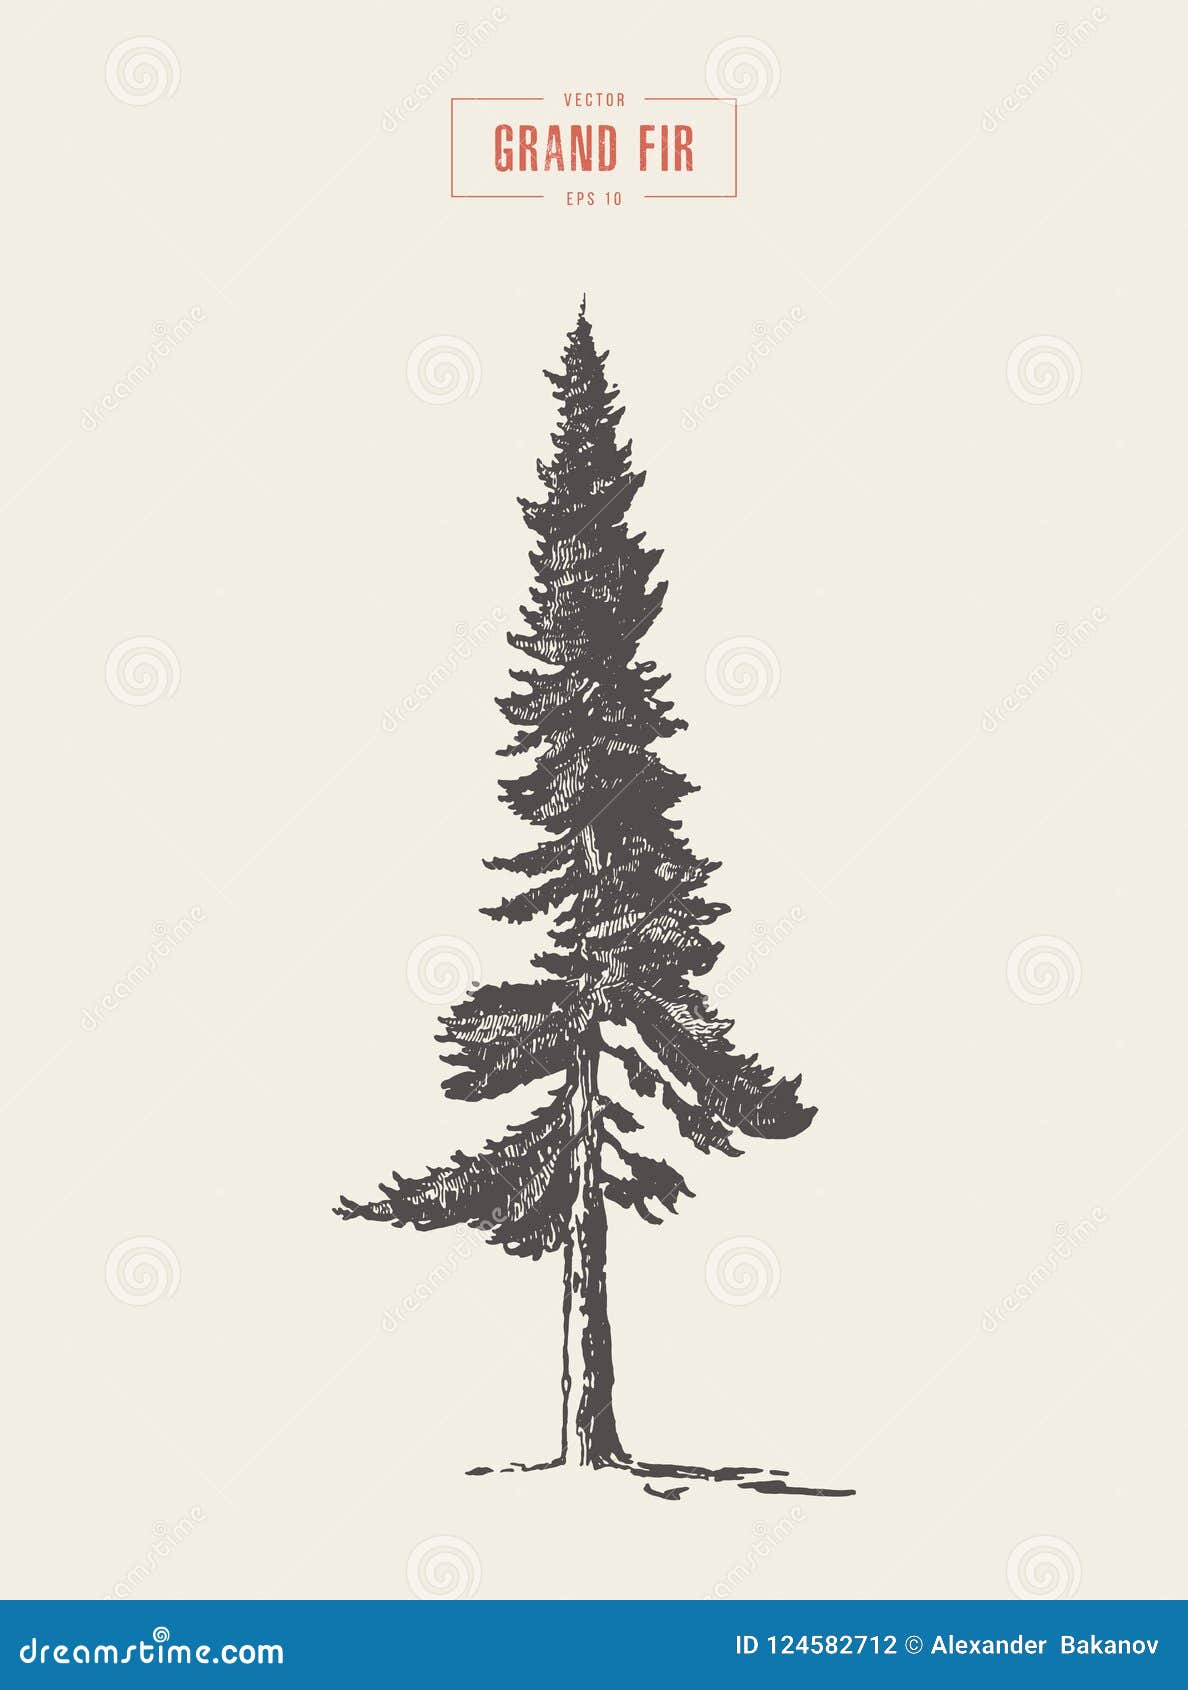 high detail vintage grand fir tree, drawn, 